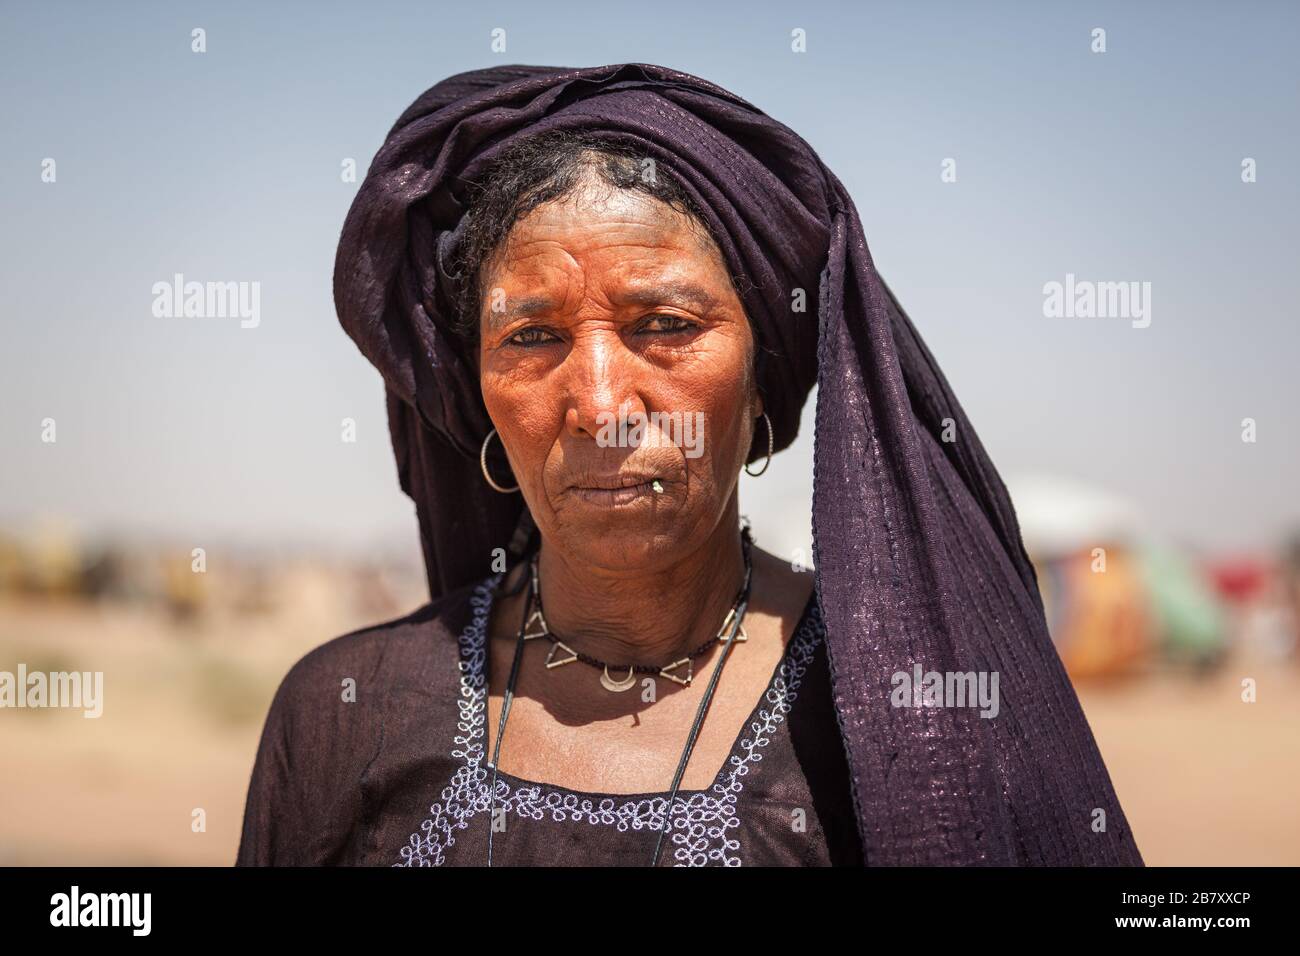 Ingall, Niger : Fulani woman in traditional turban close up Sahara Stock Photo